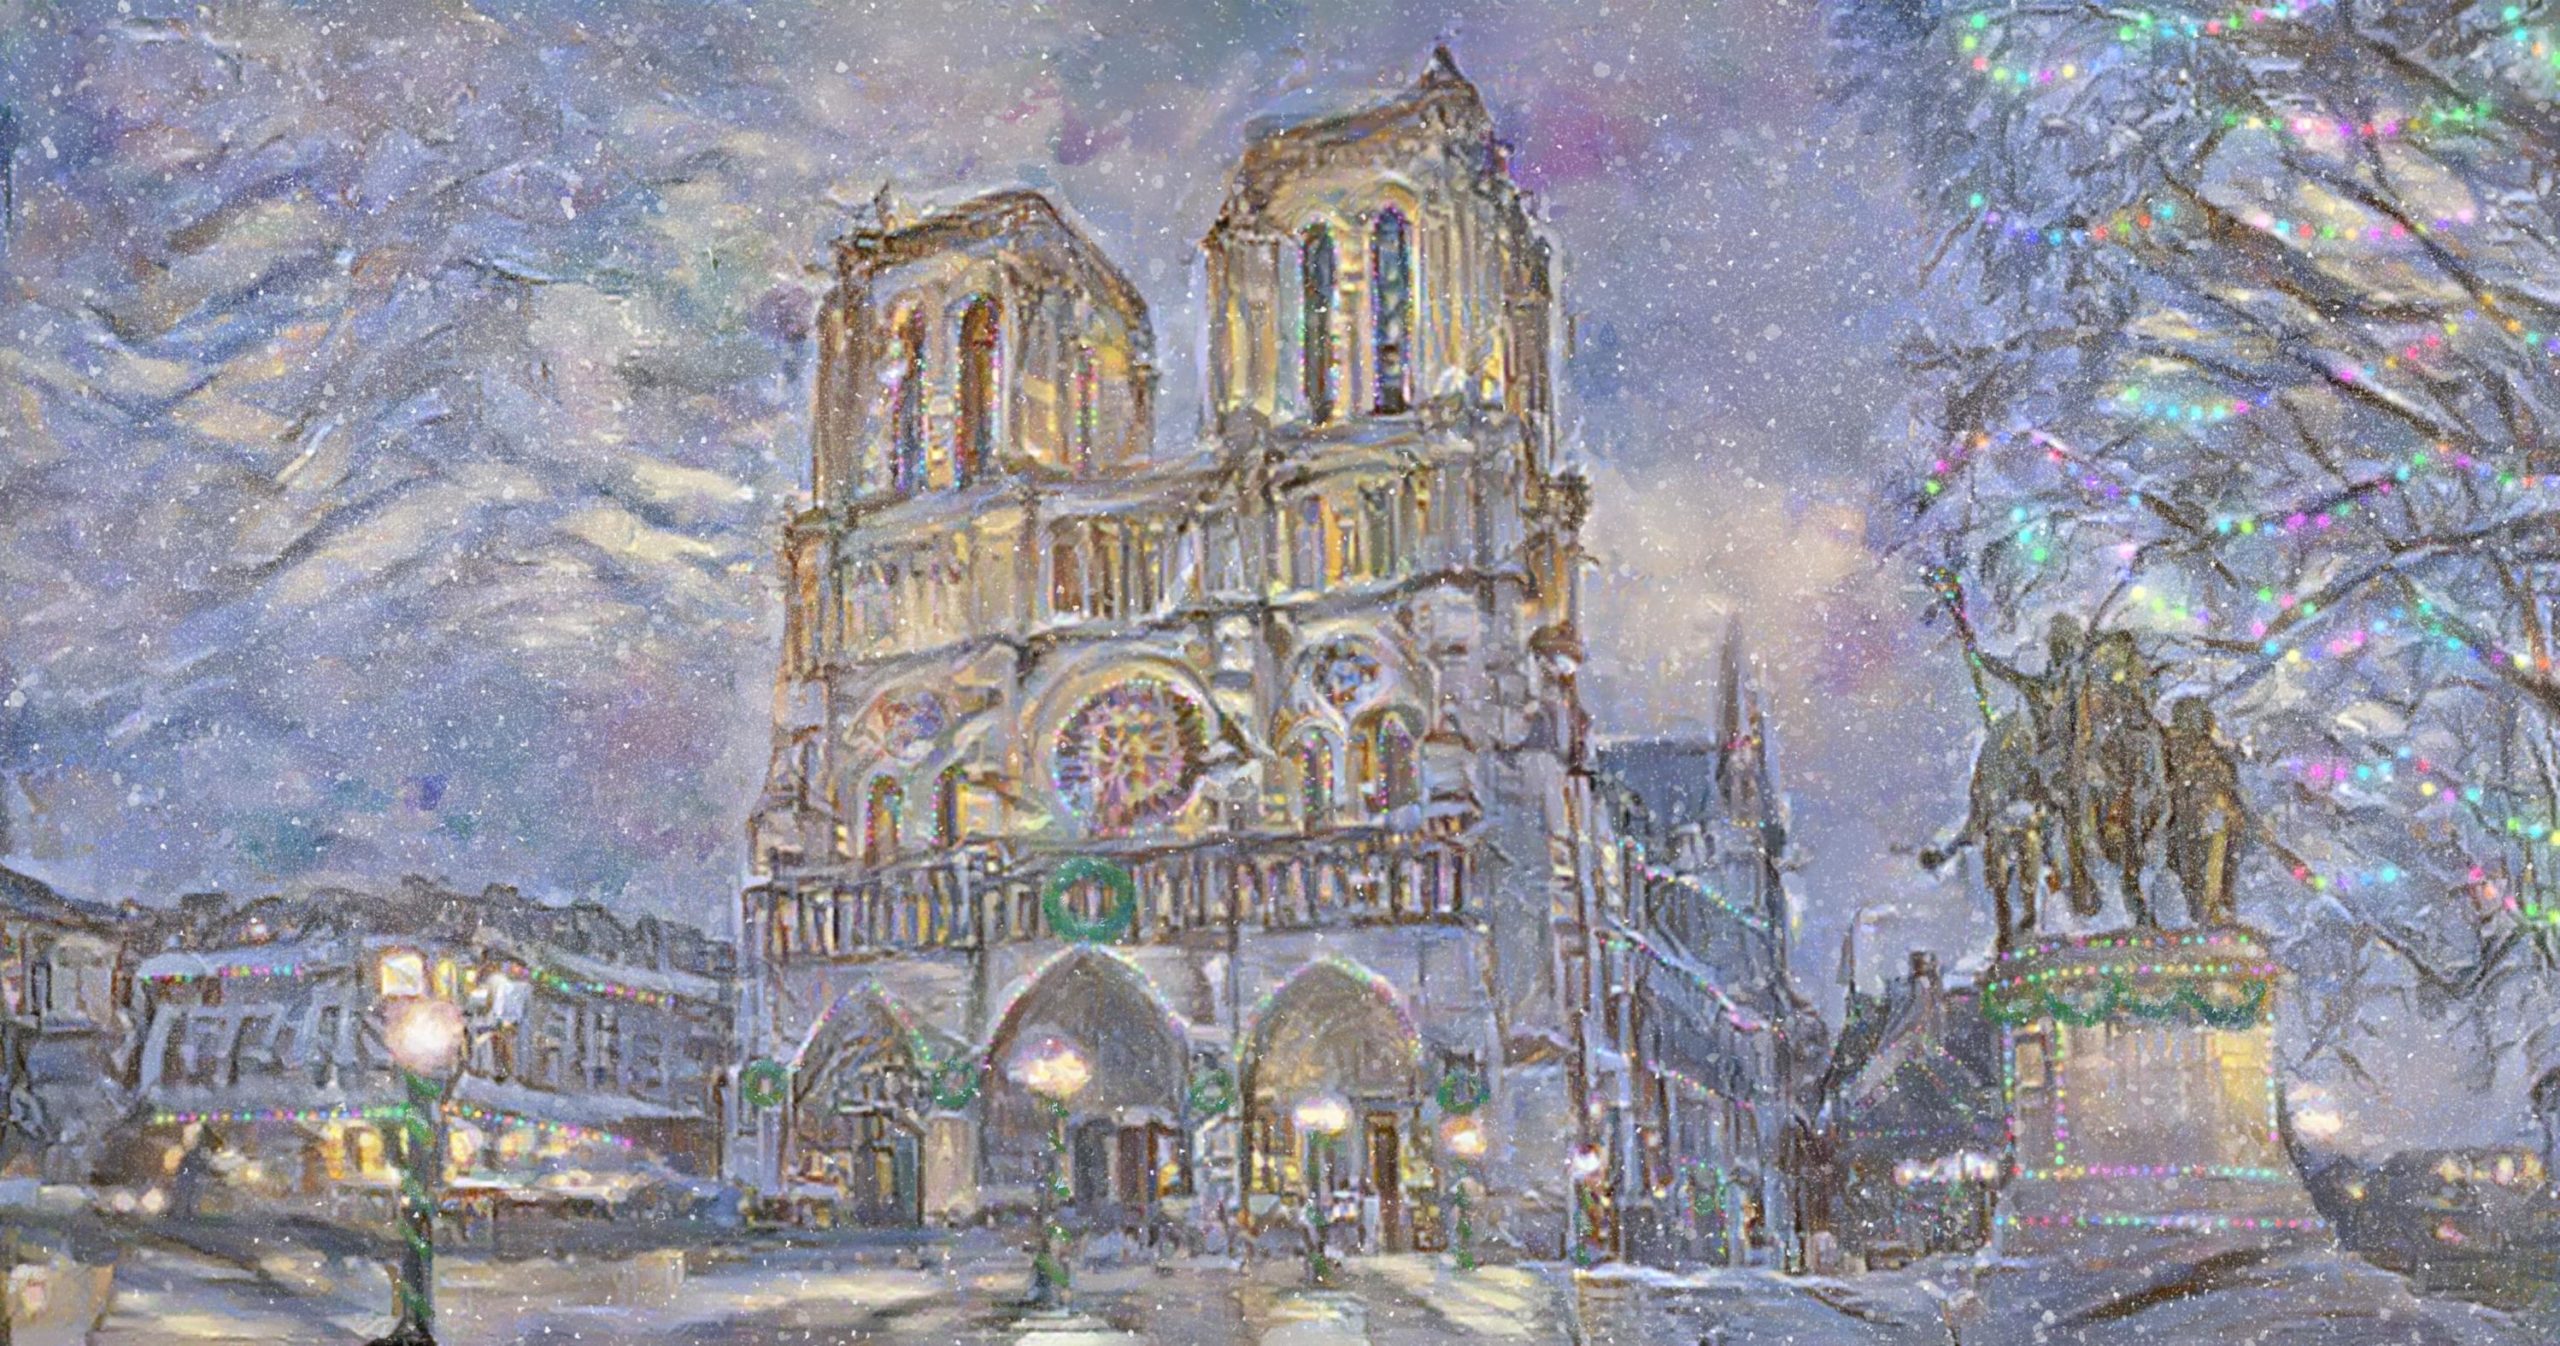 Fan Art Friday 5/31/13  The Hunchblog of Notre Dame